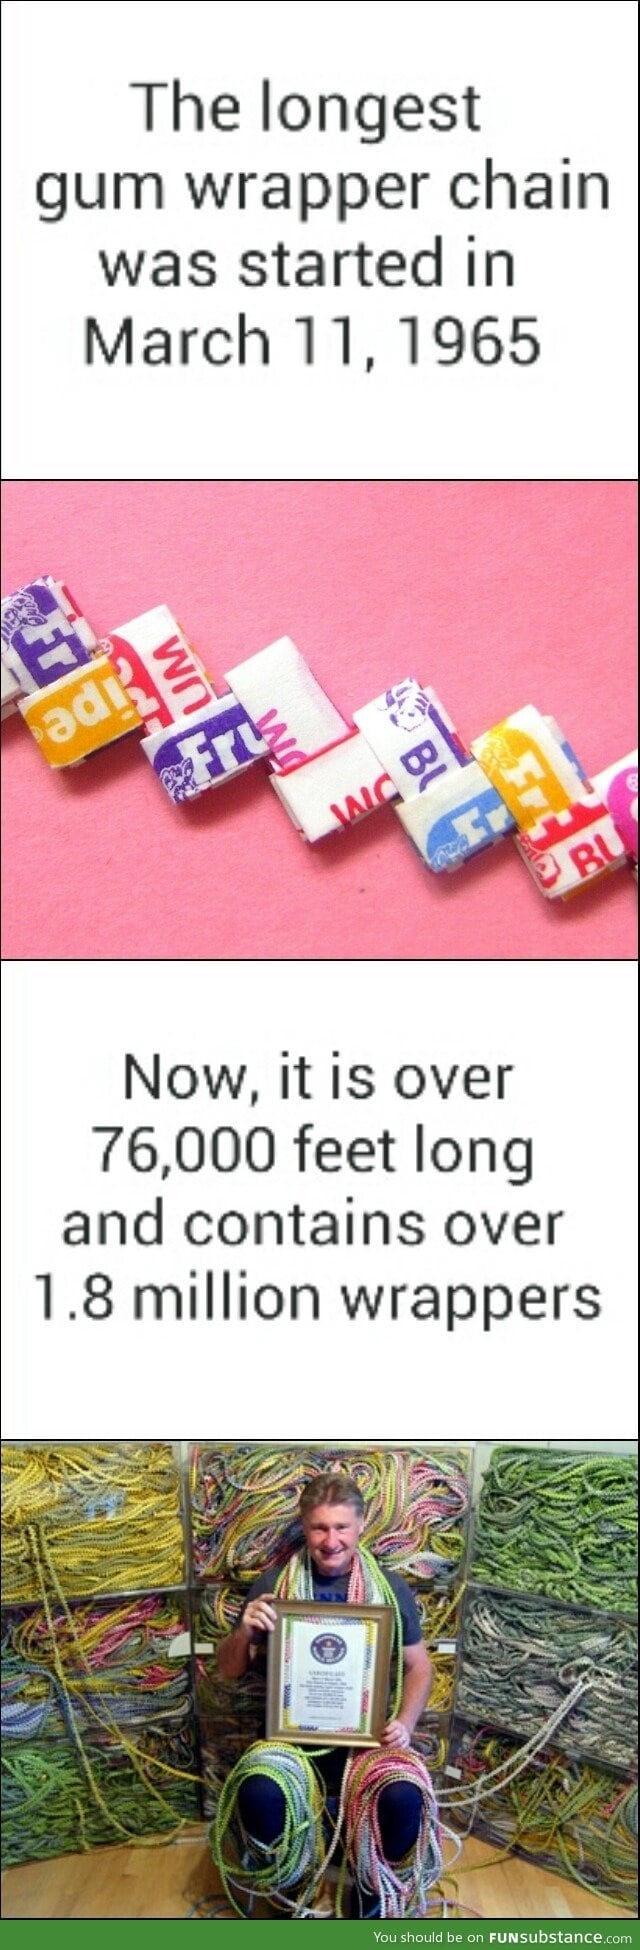 Longest gum wrapper chain